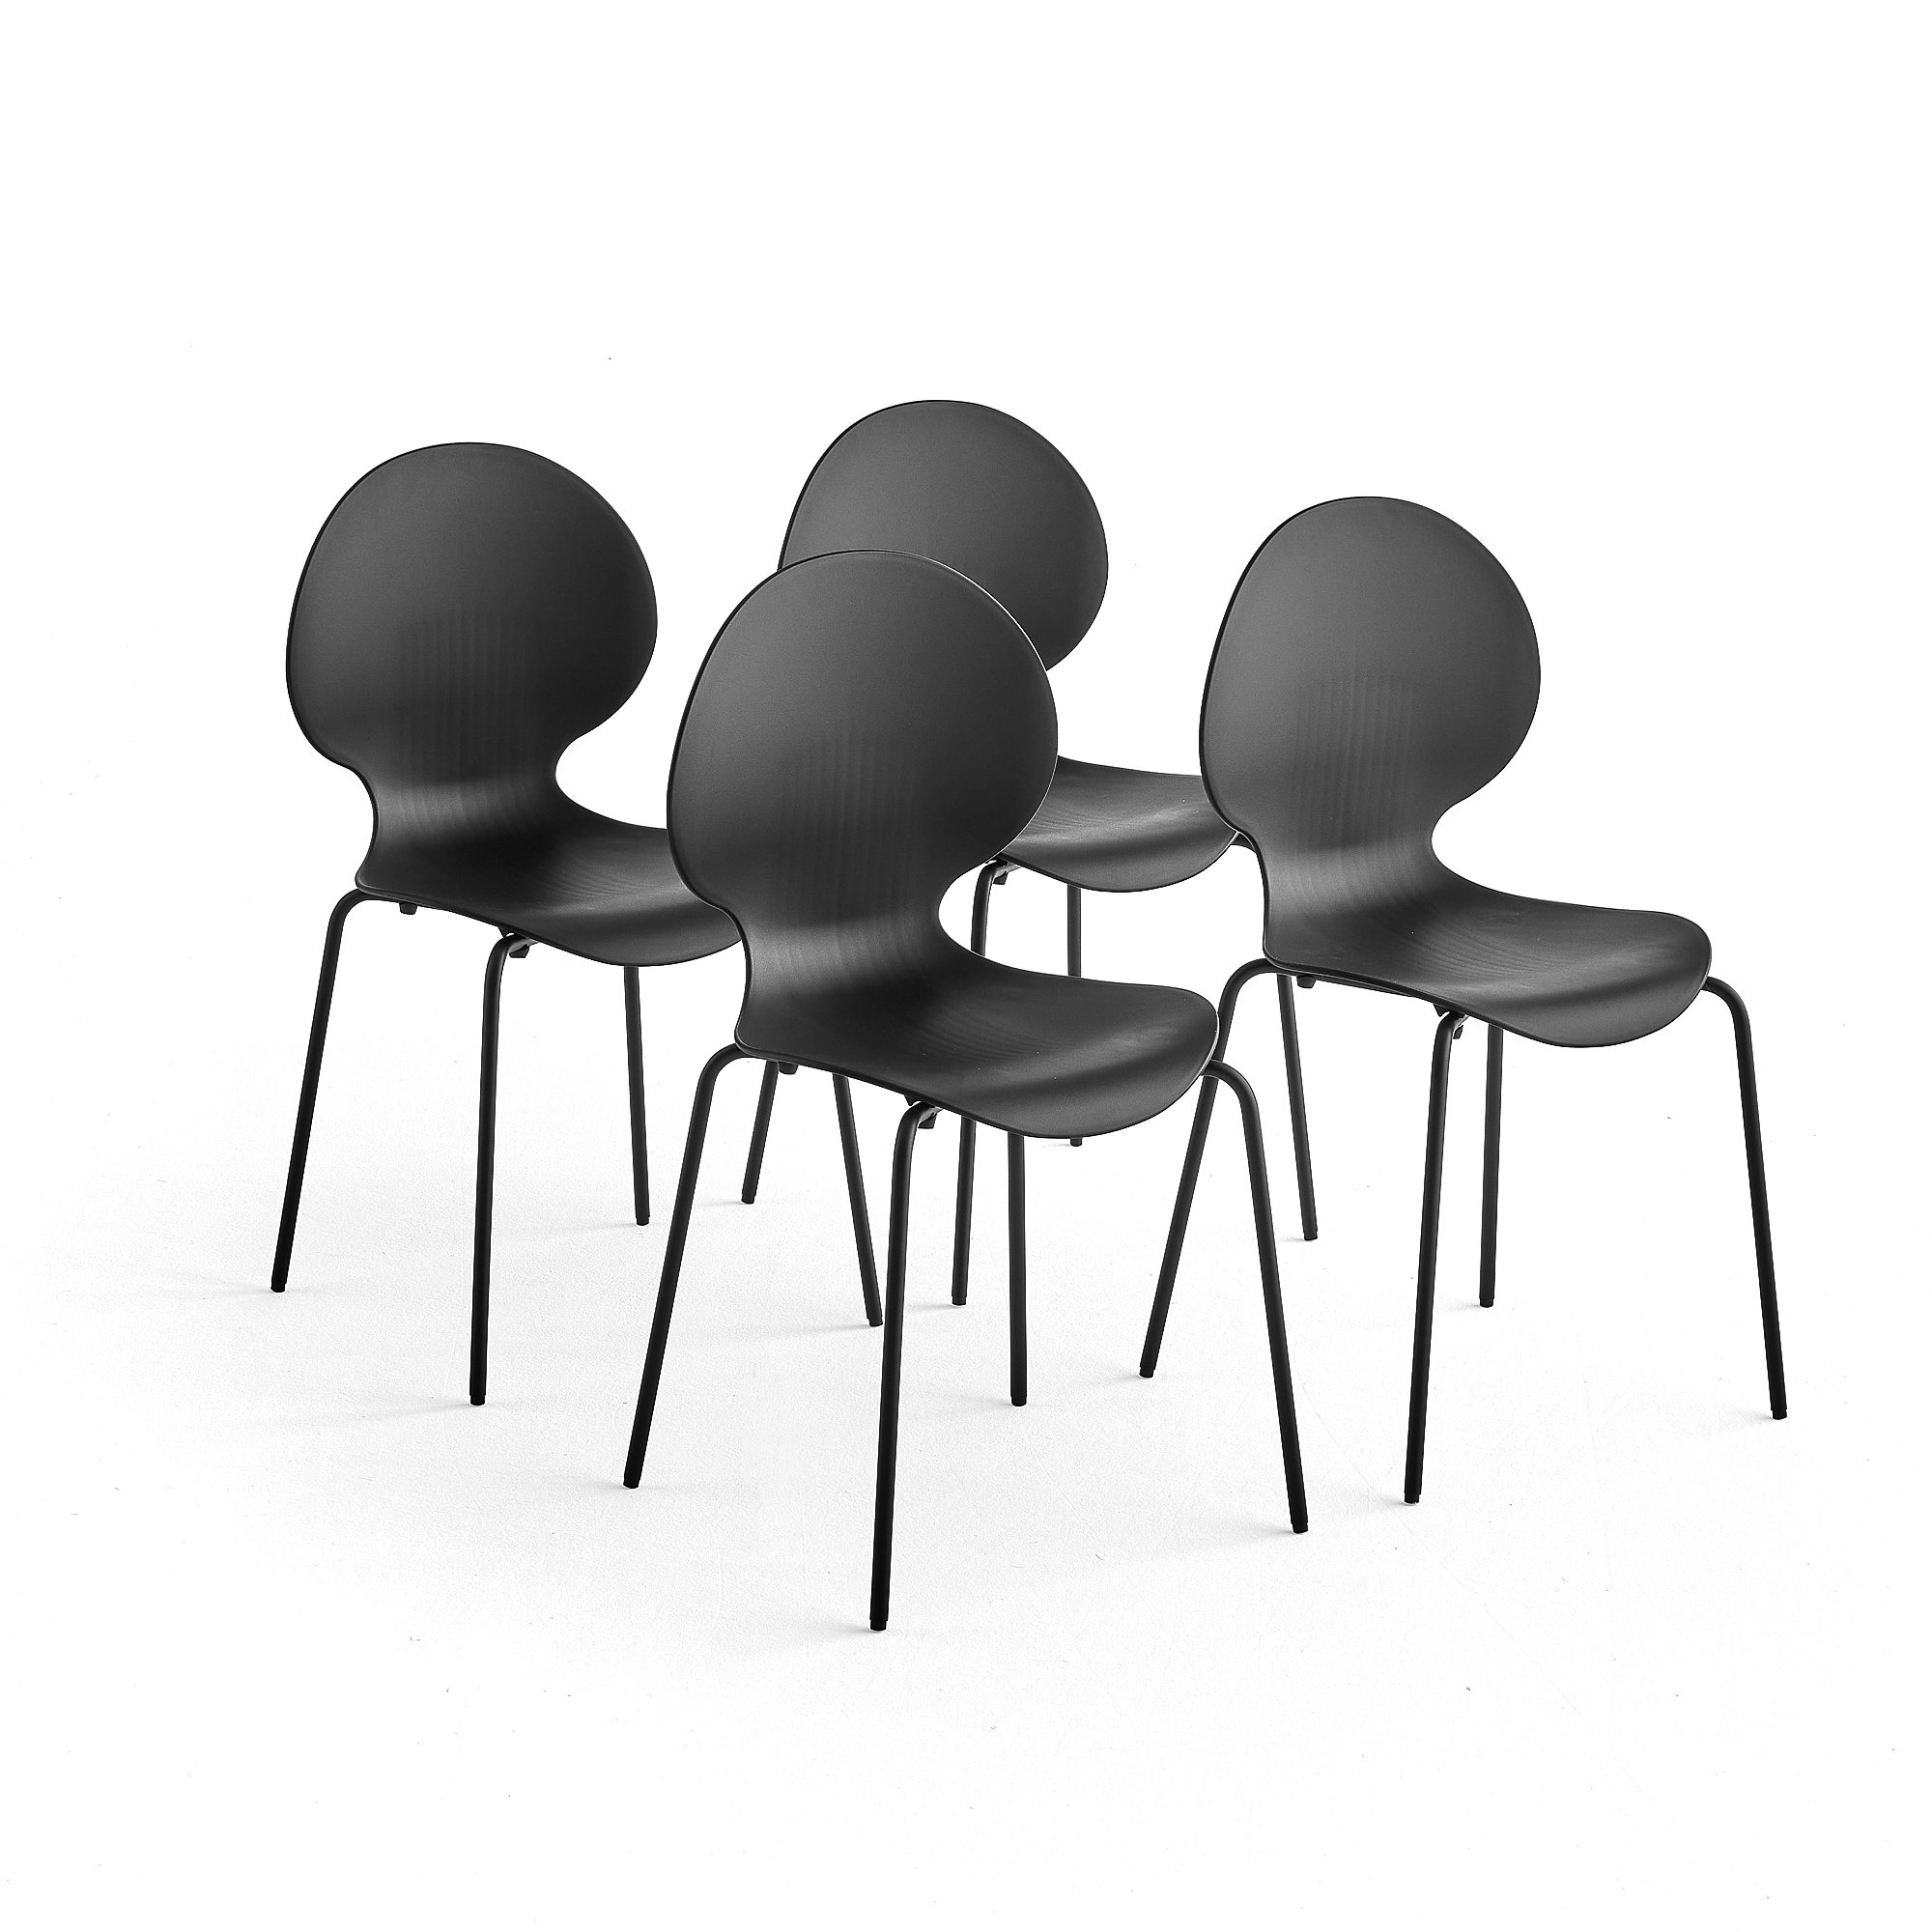 Stuhl POMONA, schwarz, 4 Stück/Packung | AJ Produkte